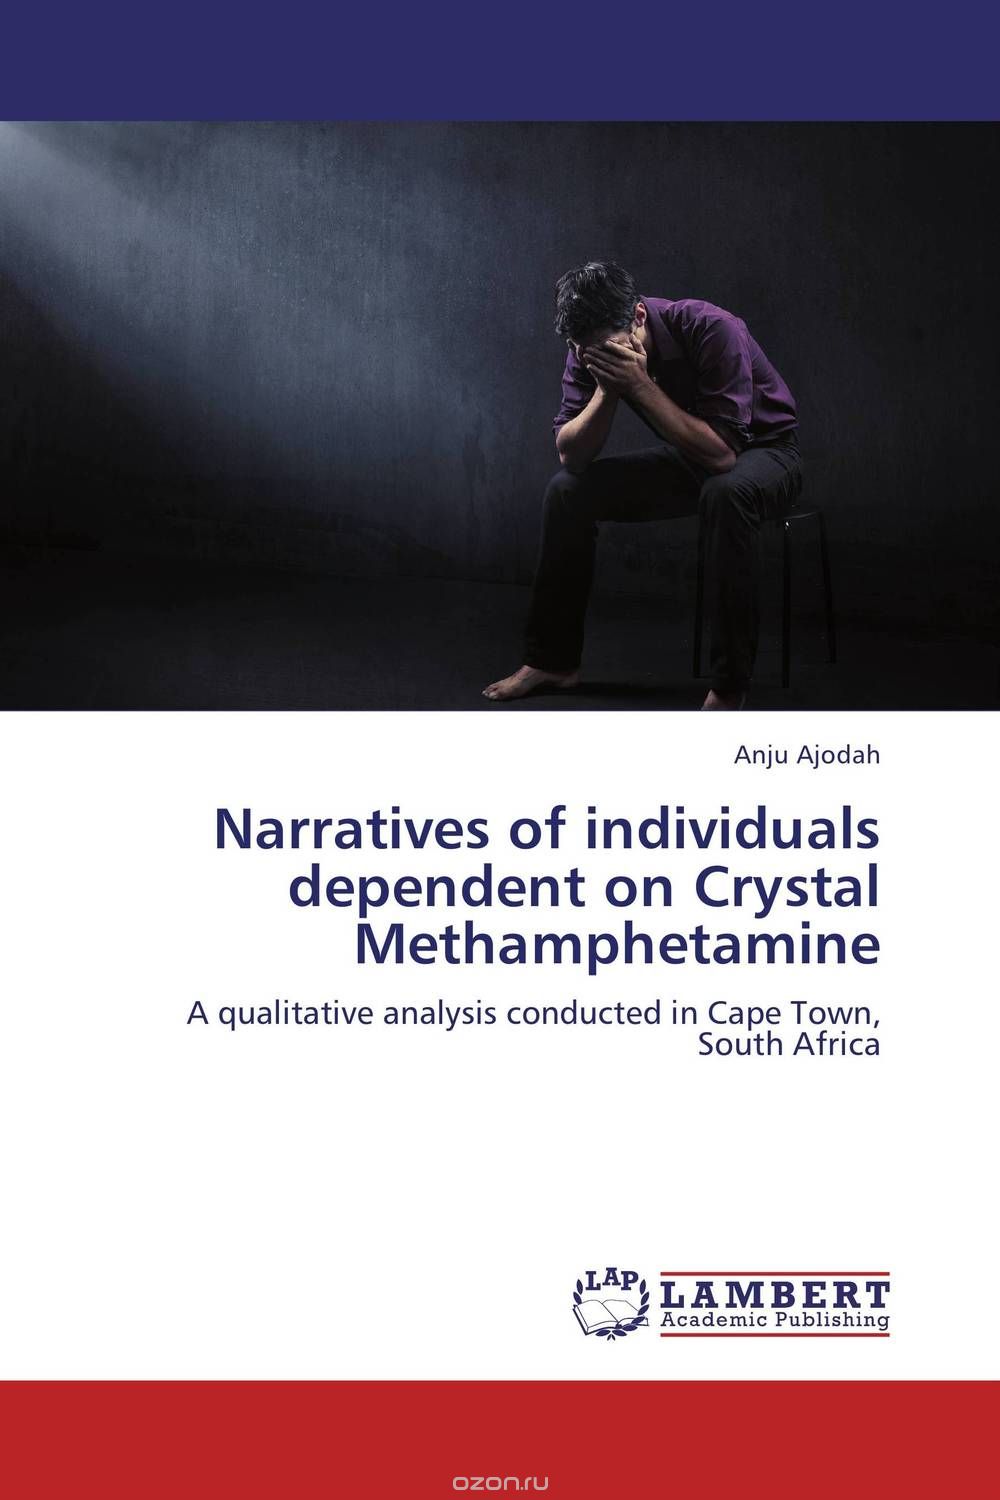 Скачать книгу "Narratives of individuals dependent on Crystal Methamphetamine"